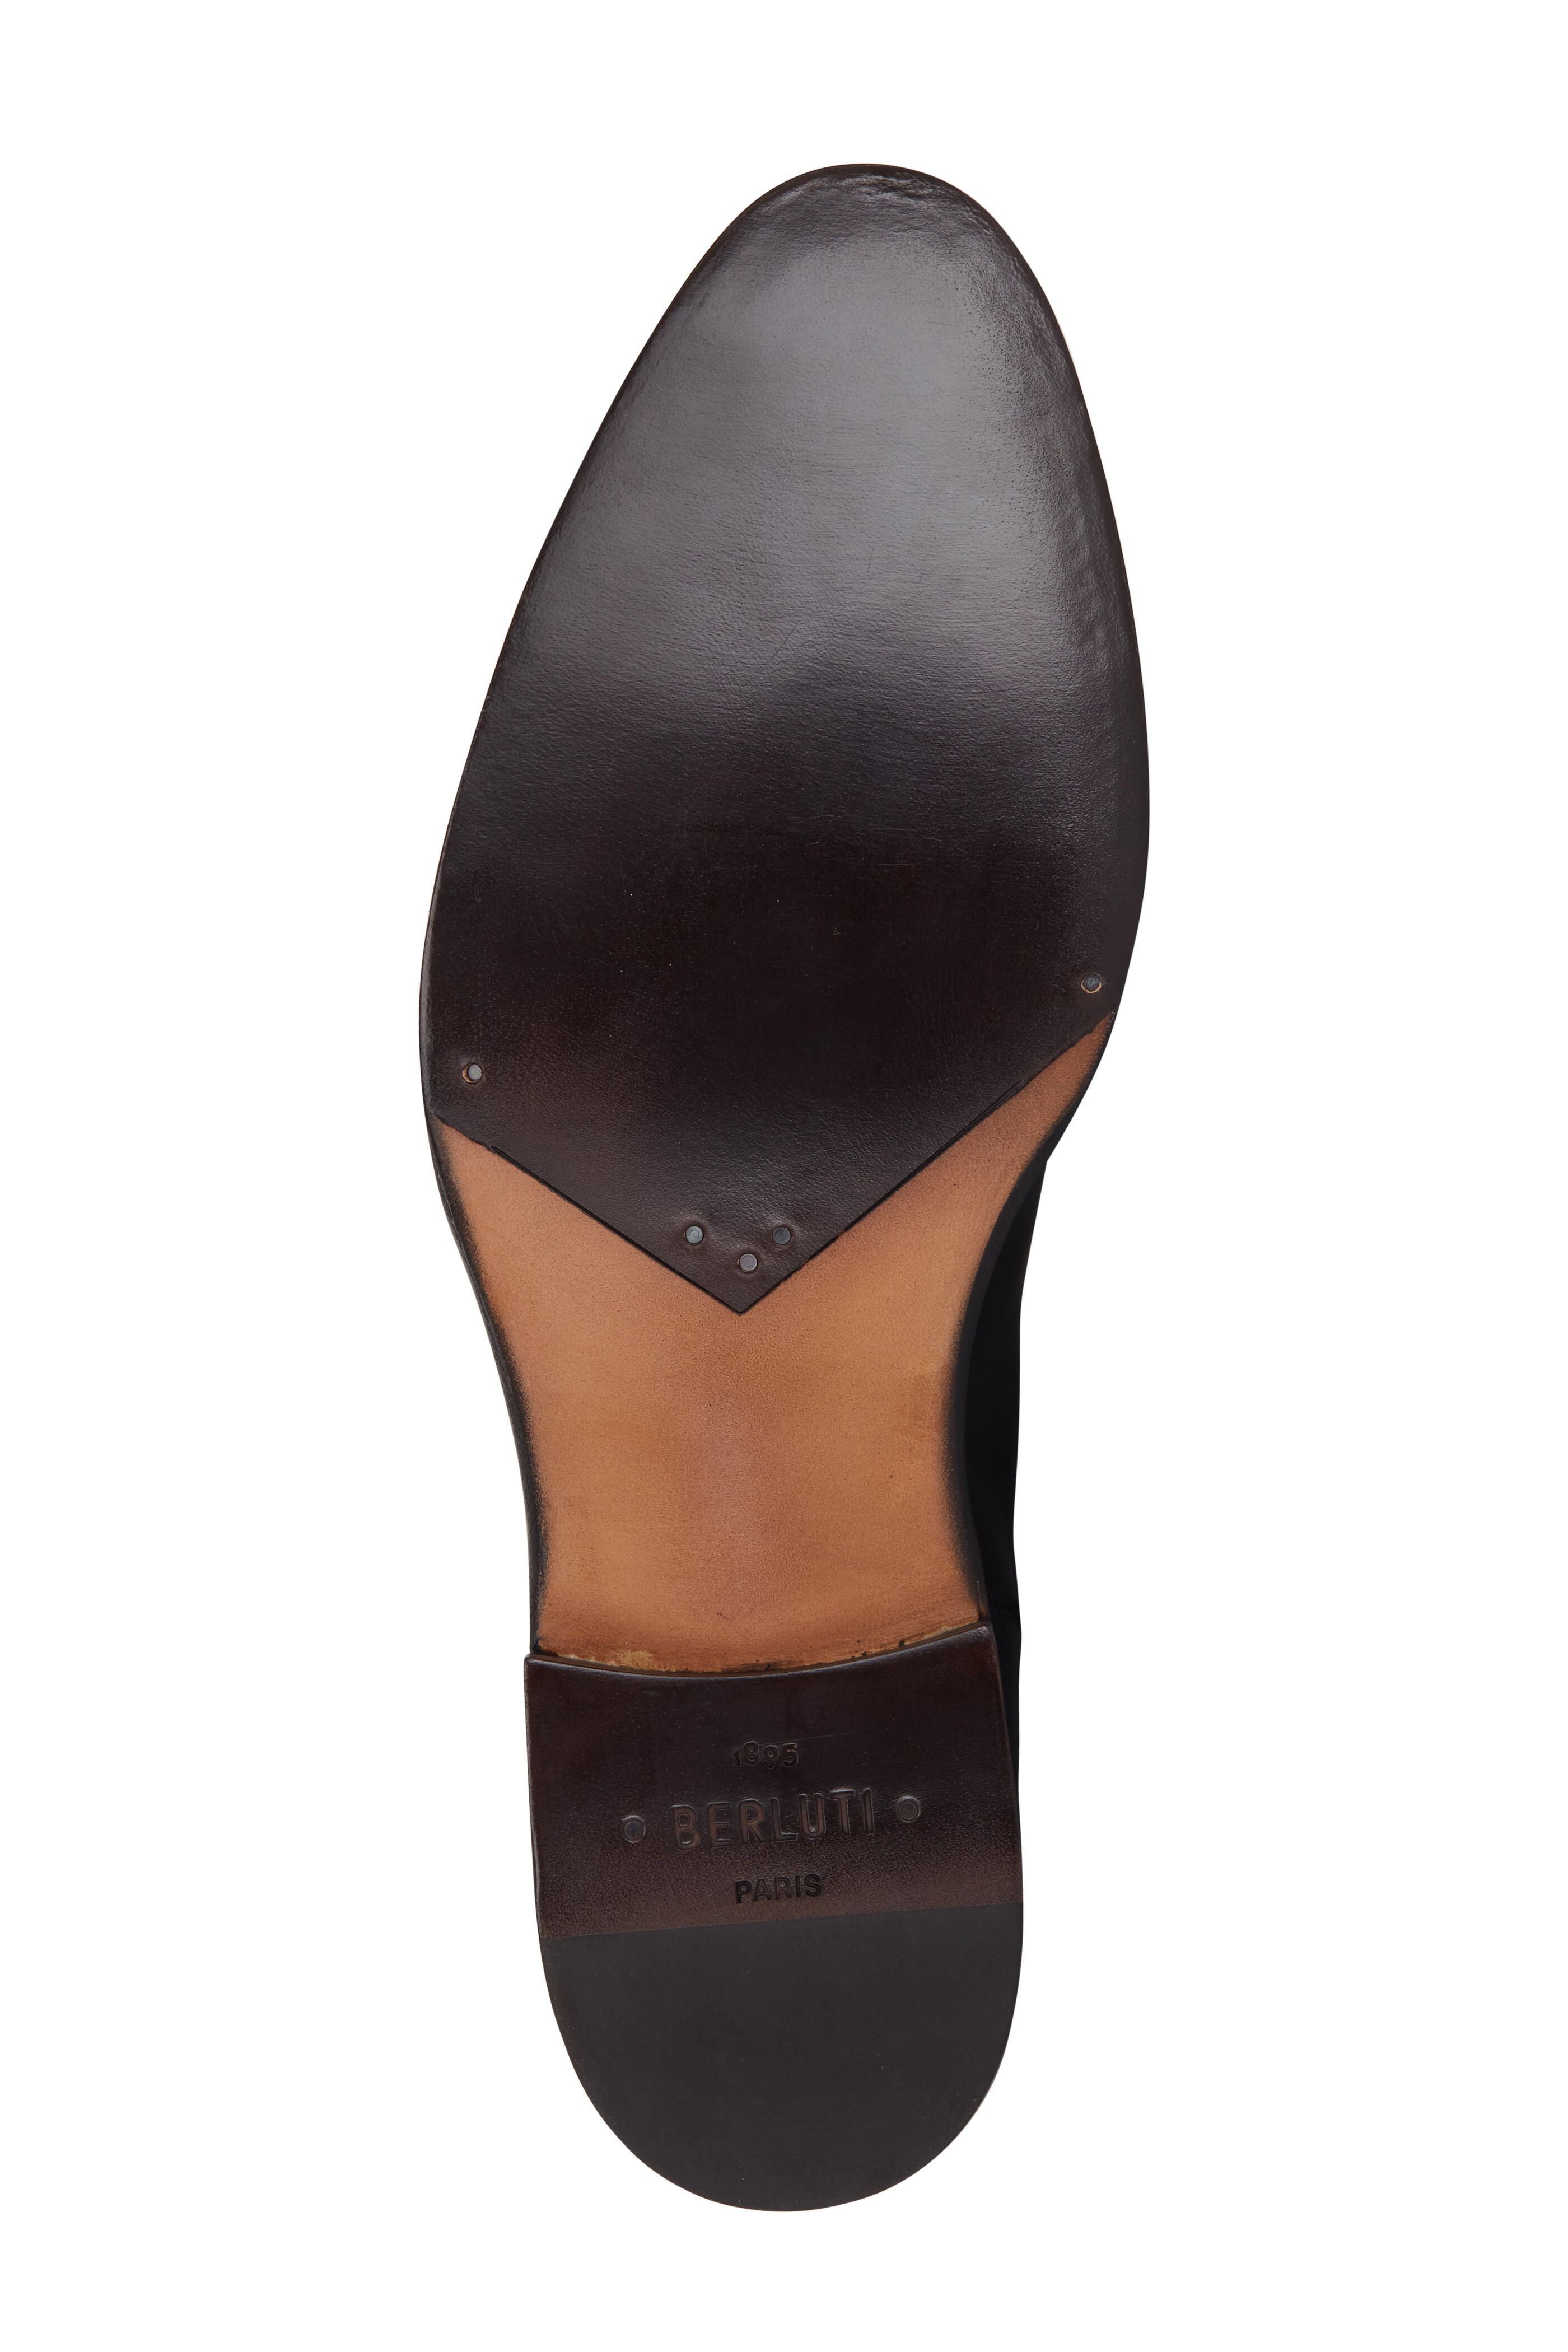 Berluti - Equilibre Nero Grigio Leather Pull-On Boot